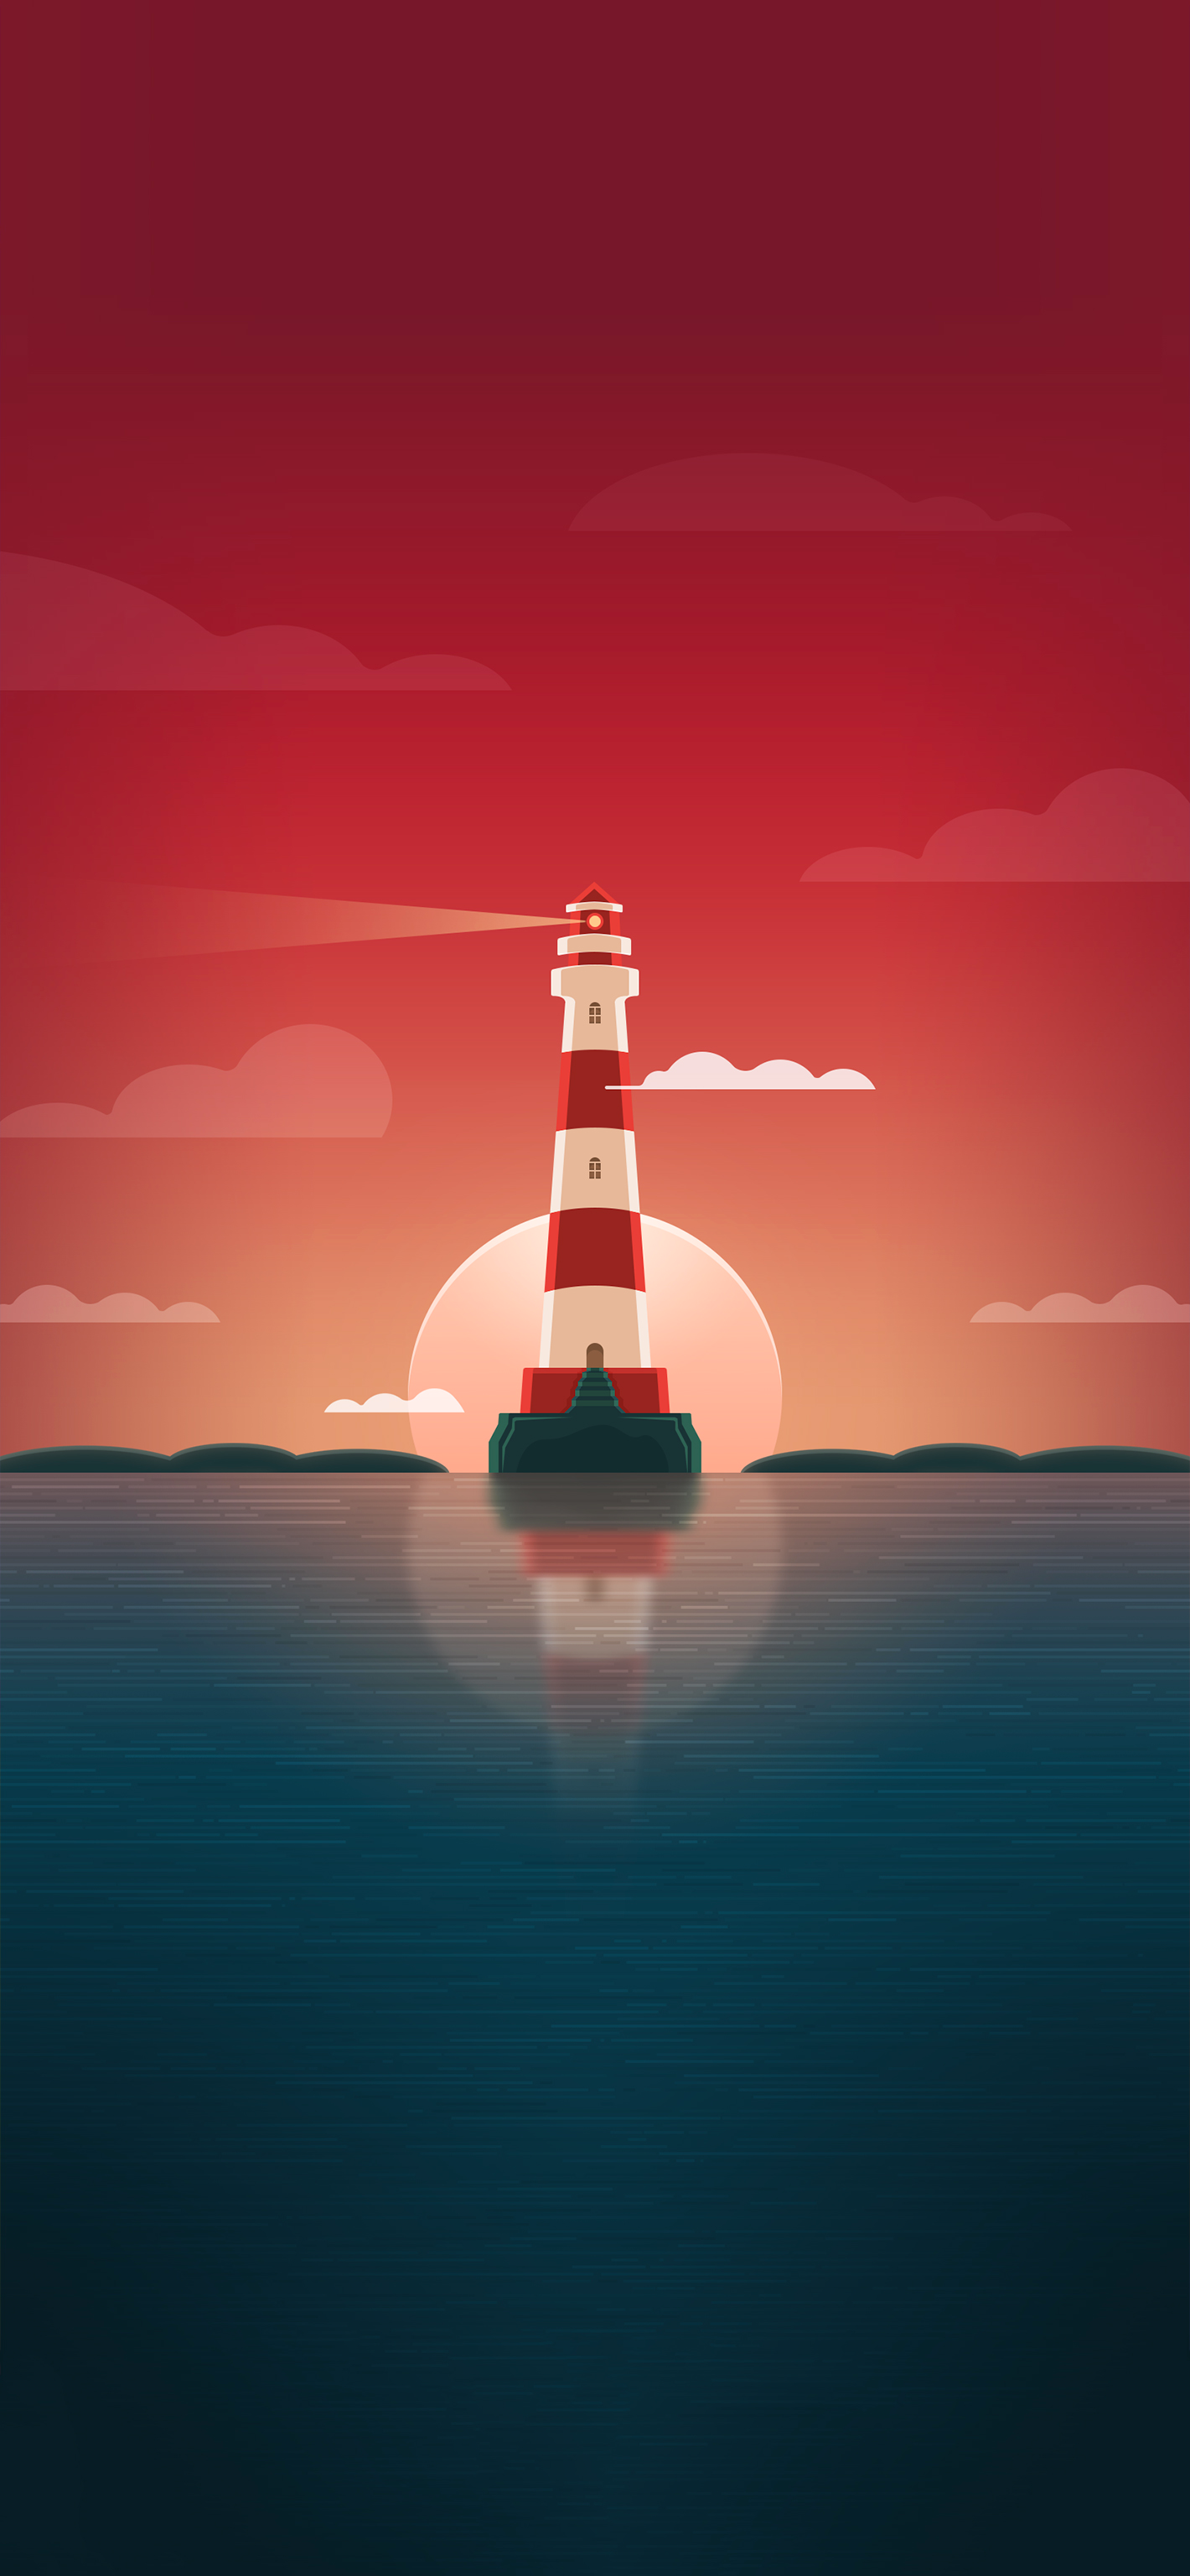 16,835 Lighthouse Wallpaper Images, Stock Photos & Vectors | Shutterstock